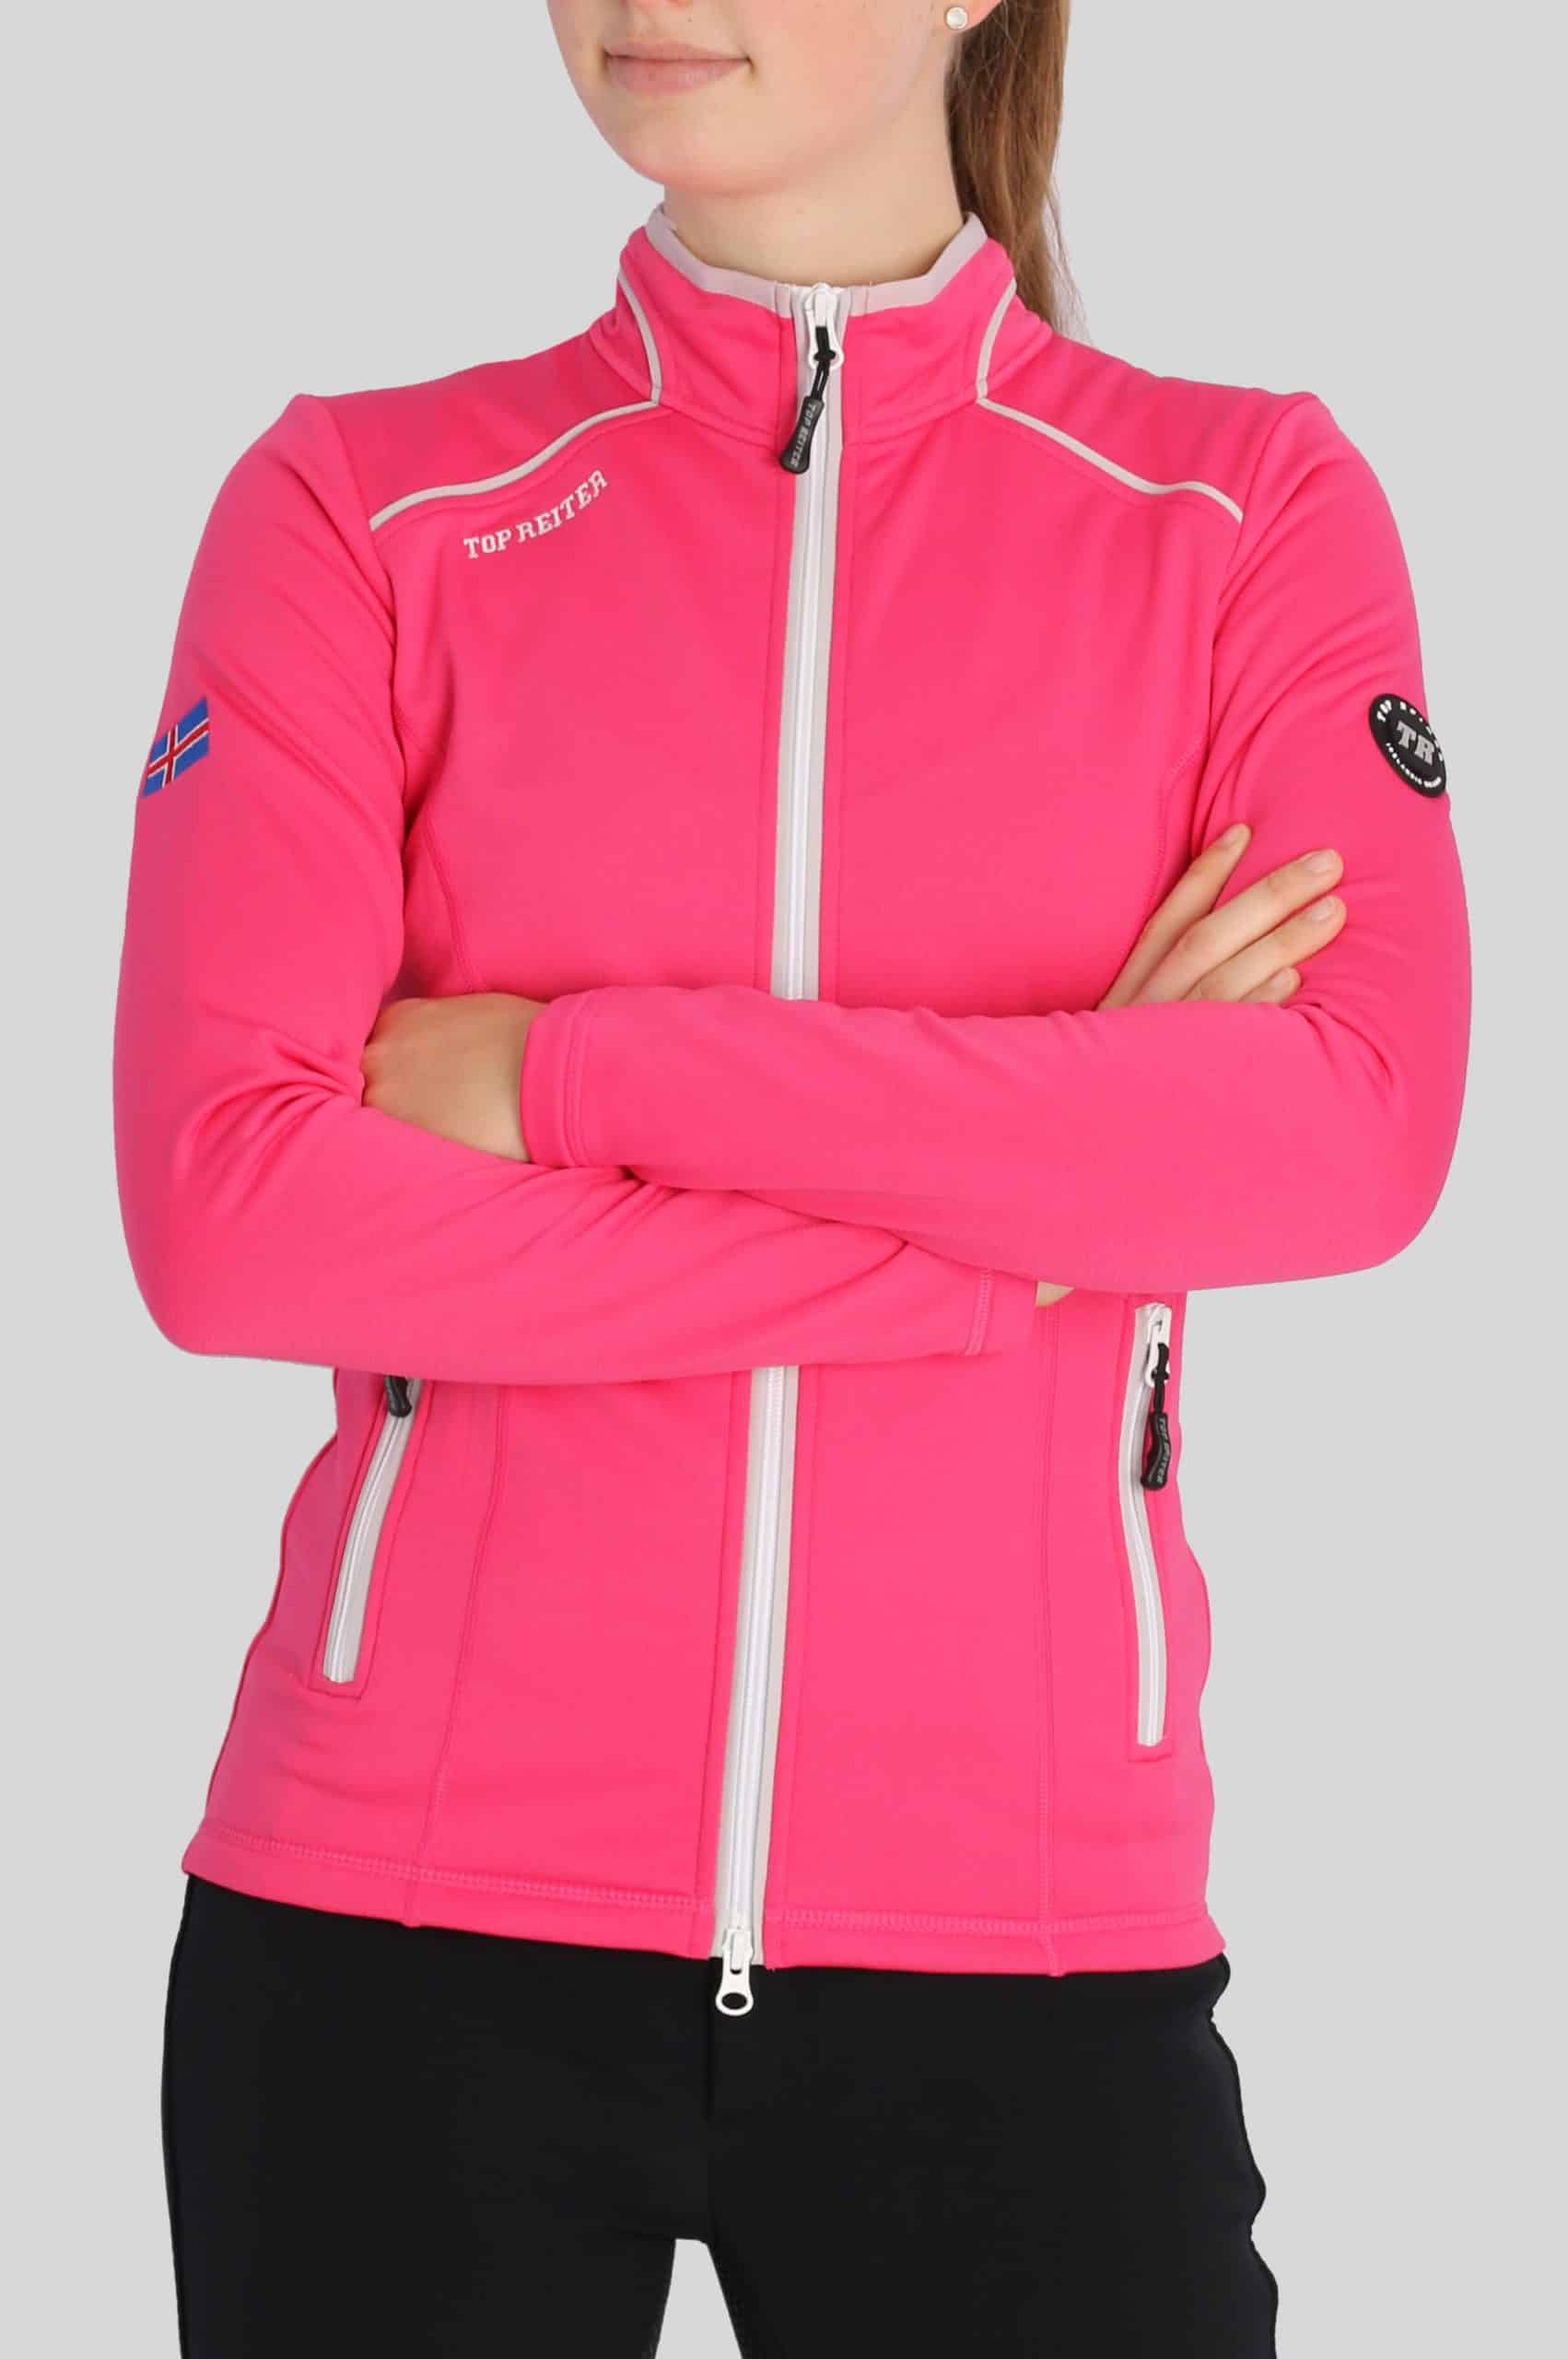 TOP REITER Sweatshirt Bylgja – Pink